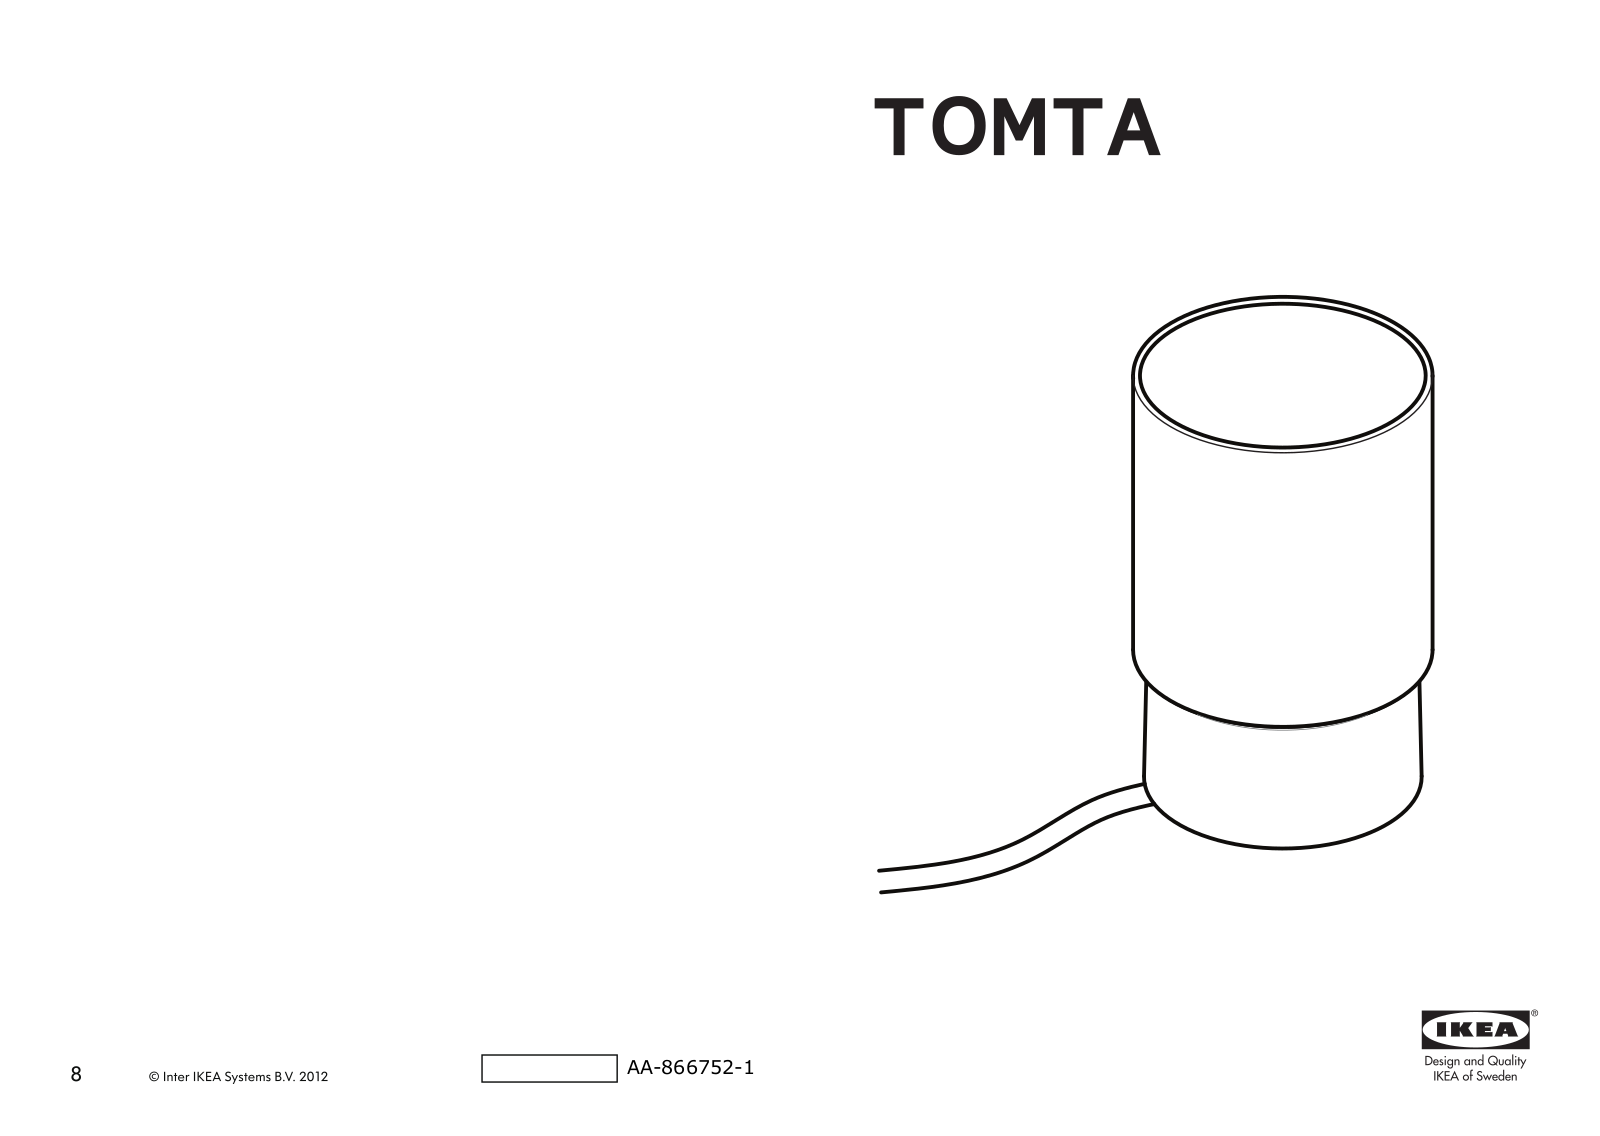 IKEA TOMTA User Manual